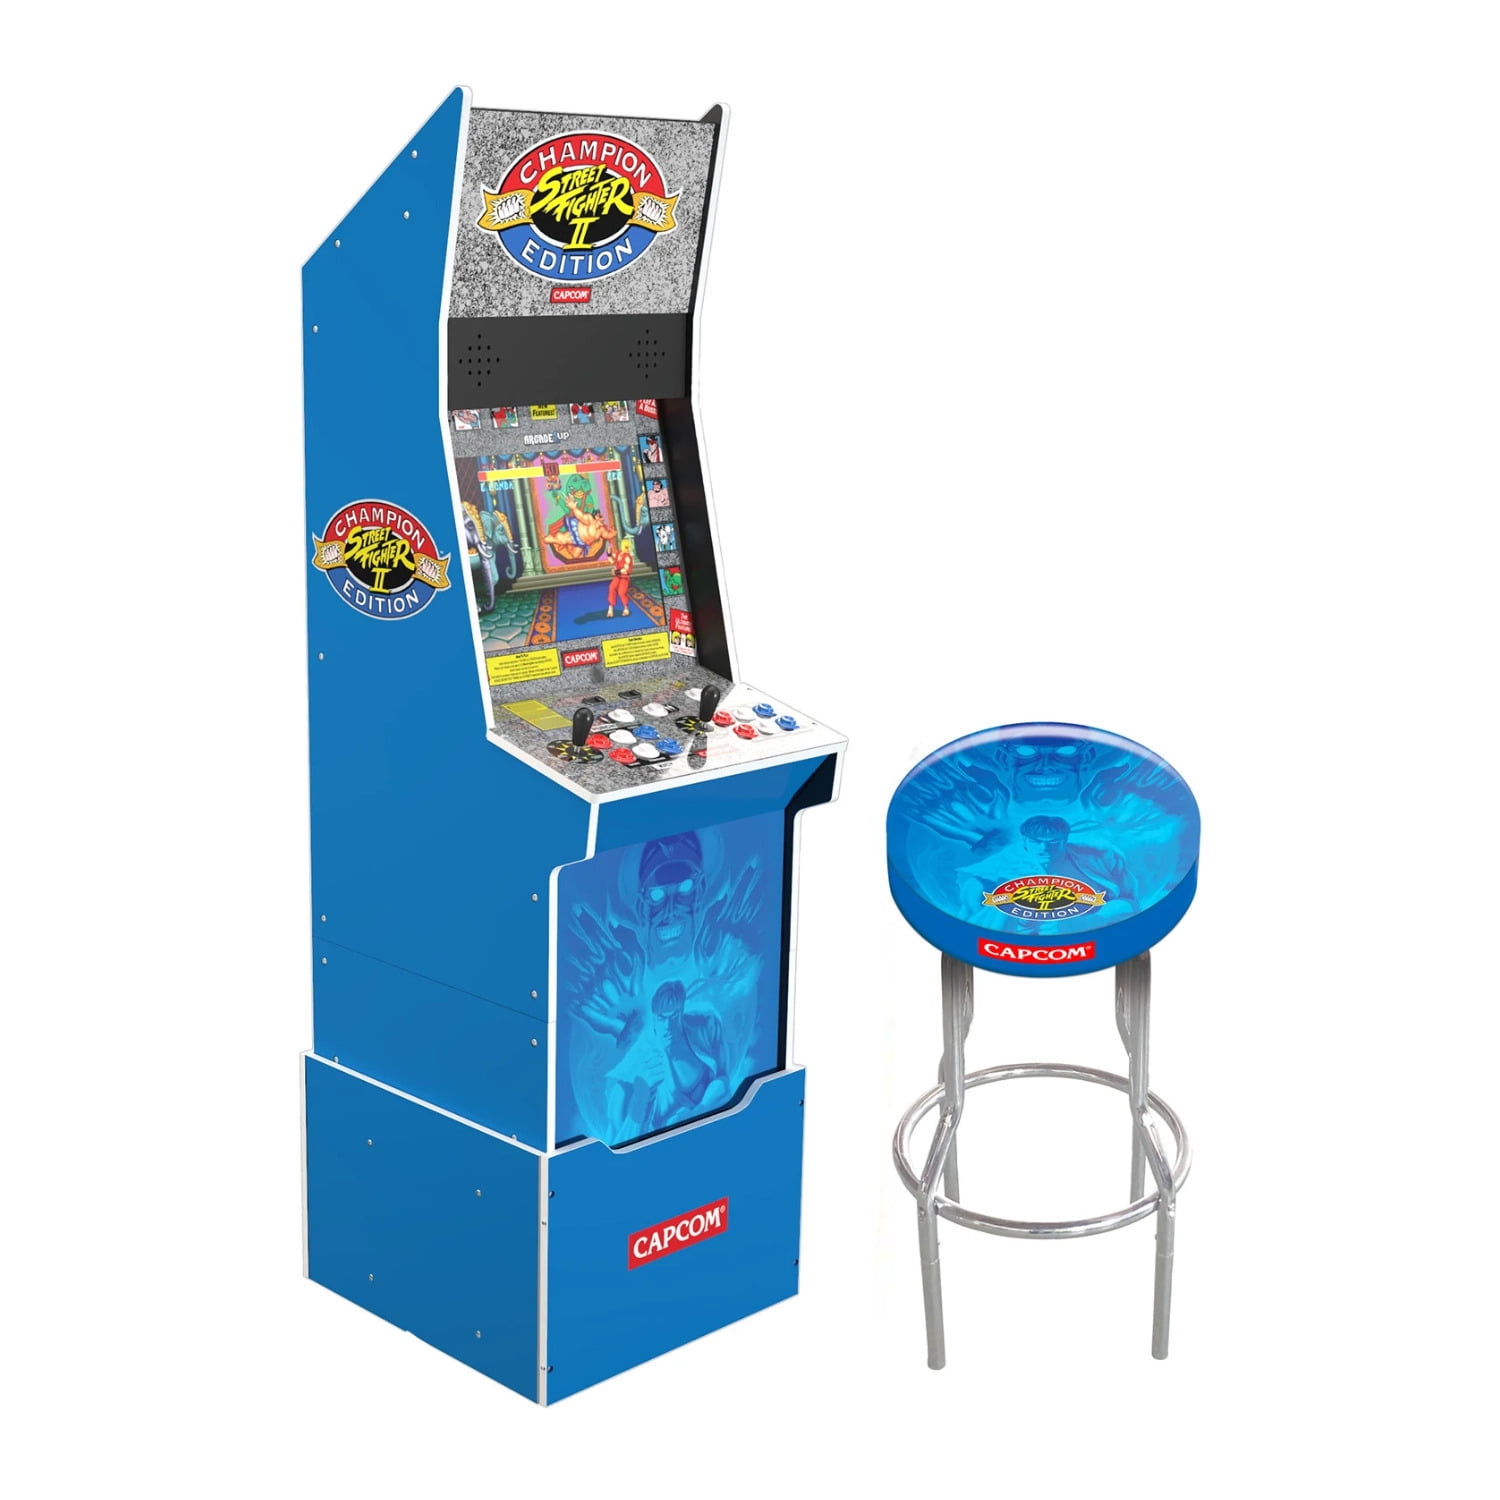 Buy Arcade Games Machines for Home, Bigaint Arcade Machines 2